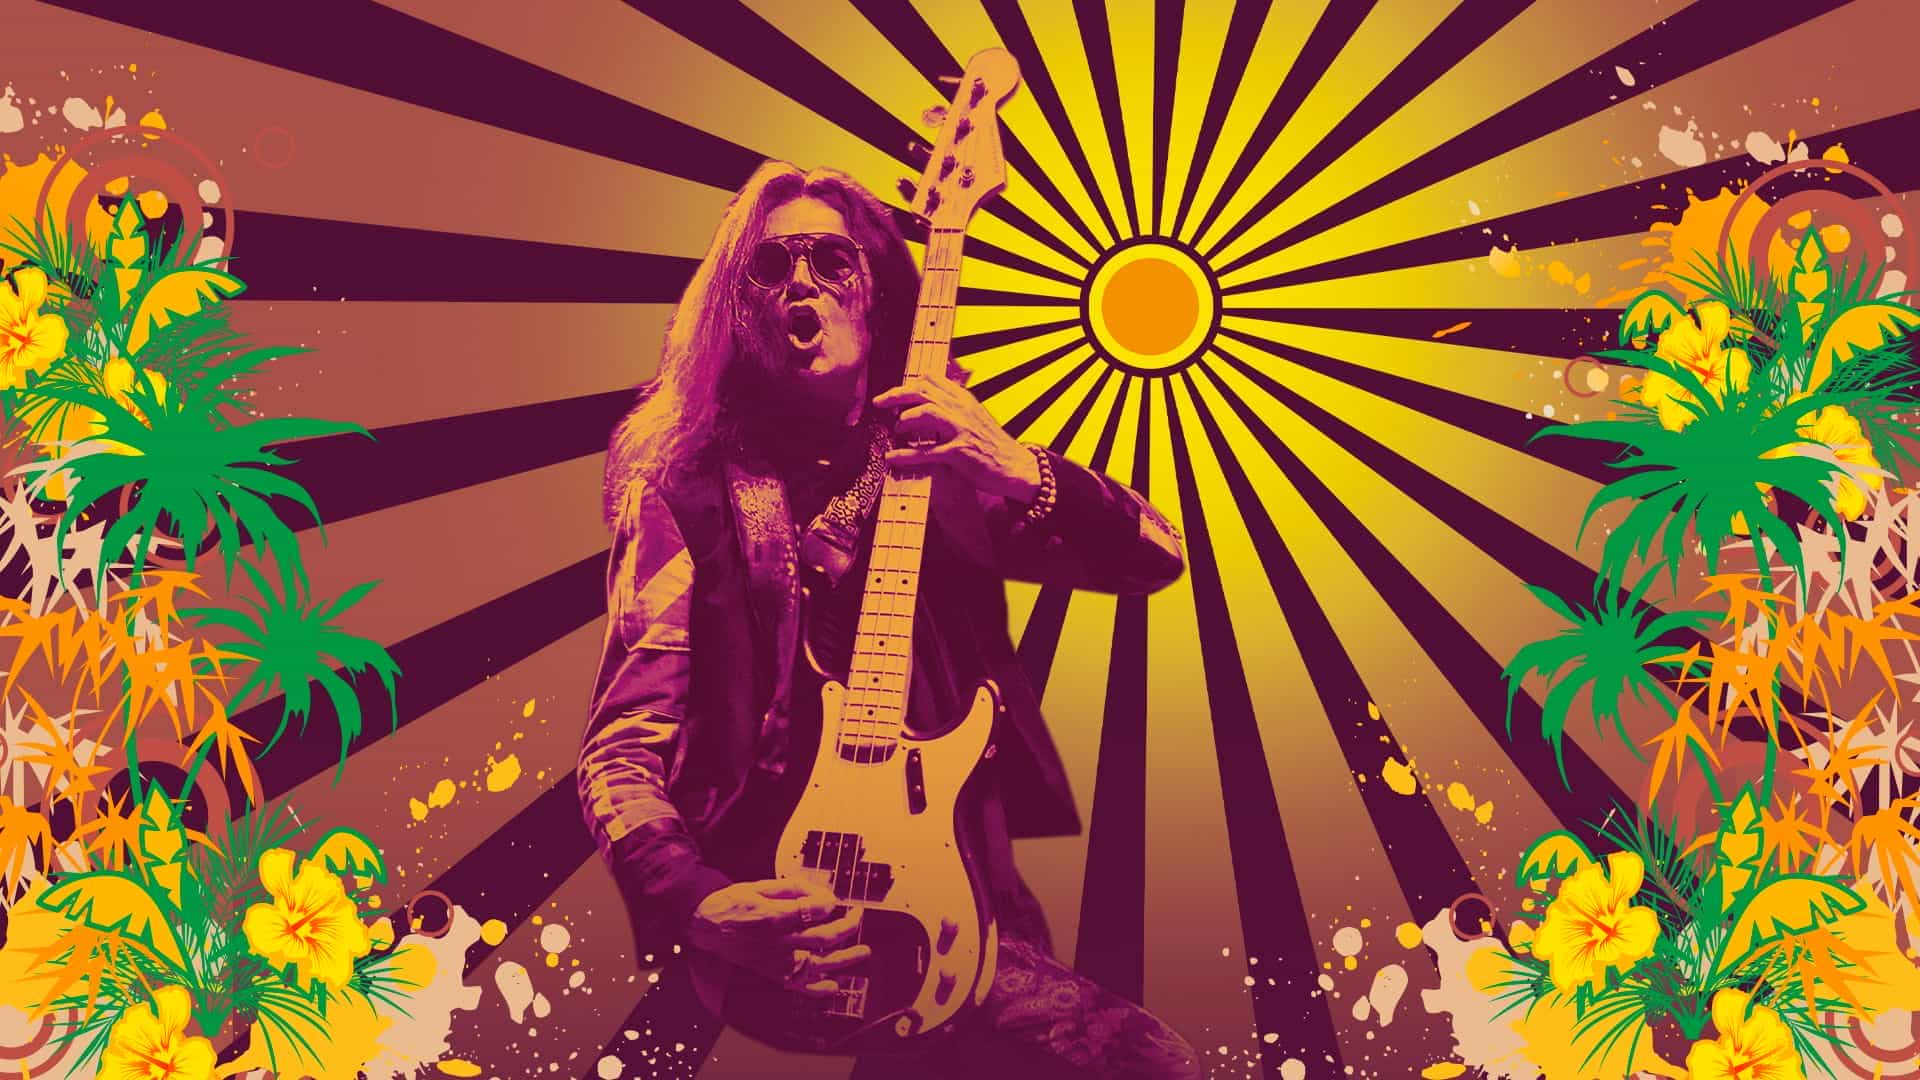 Glenn Hughes - Classic Deep Purple Live